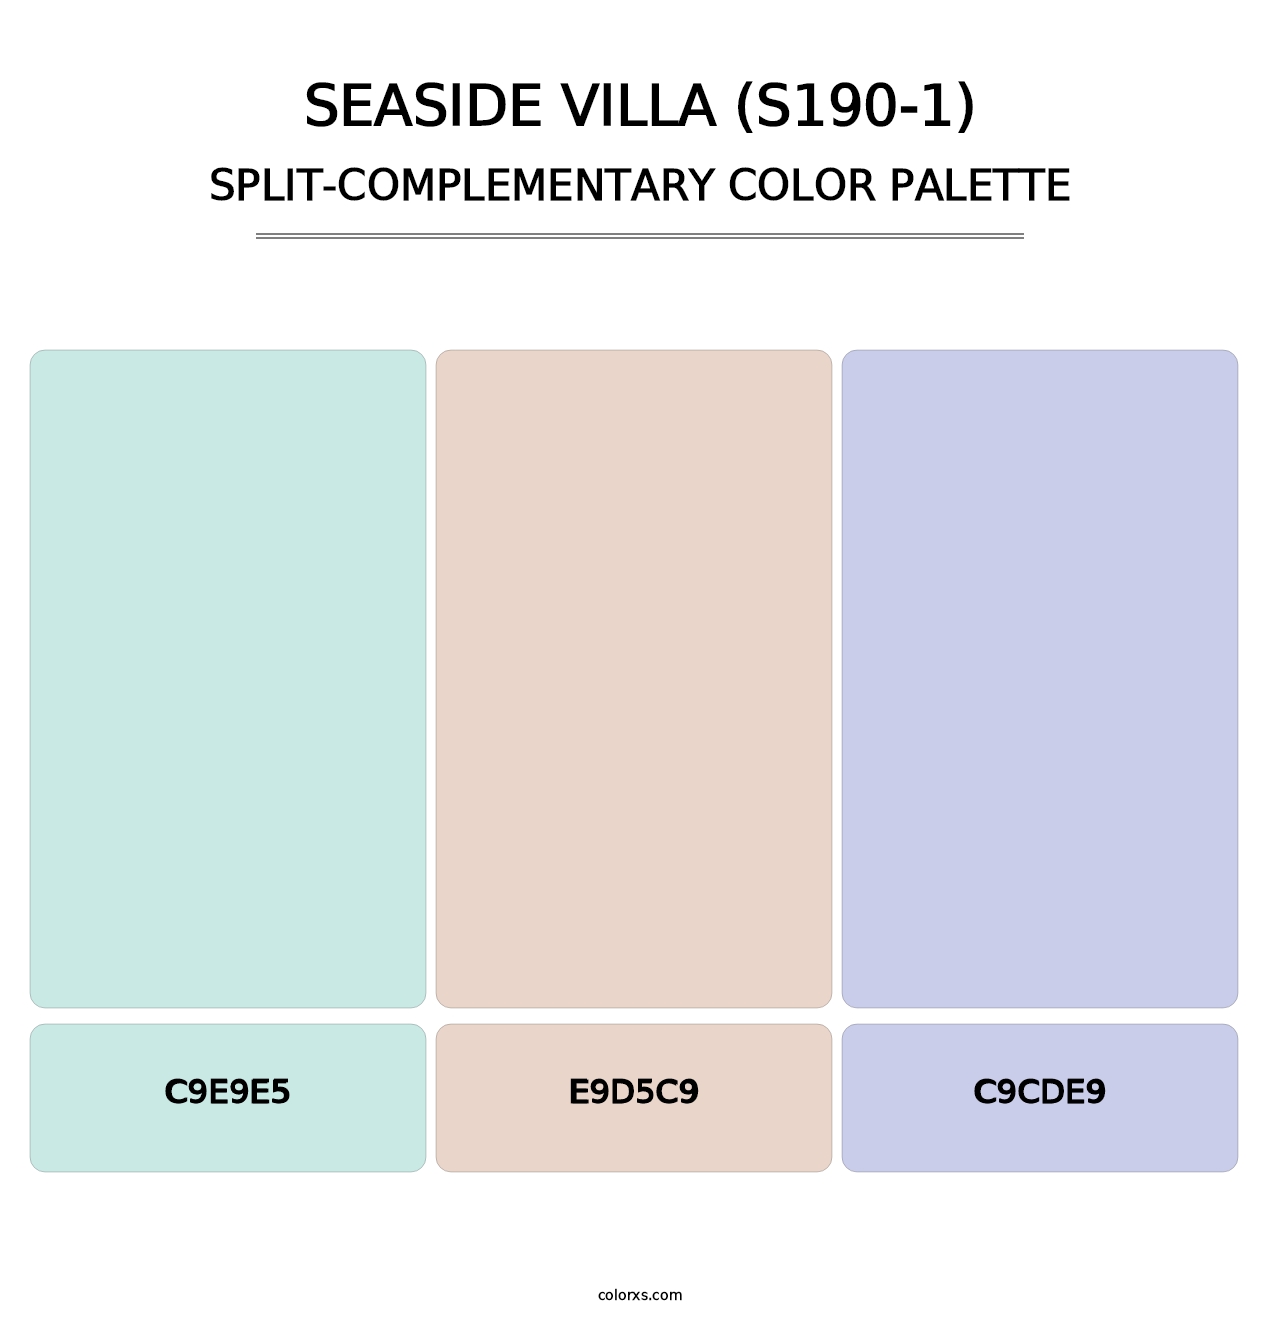 Seaside Villa (S190-1) - Split-Complementary Color Palette